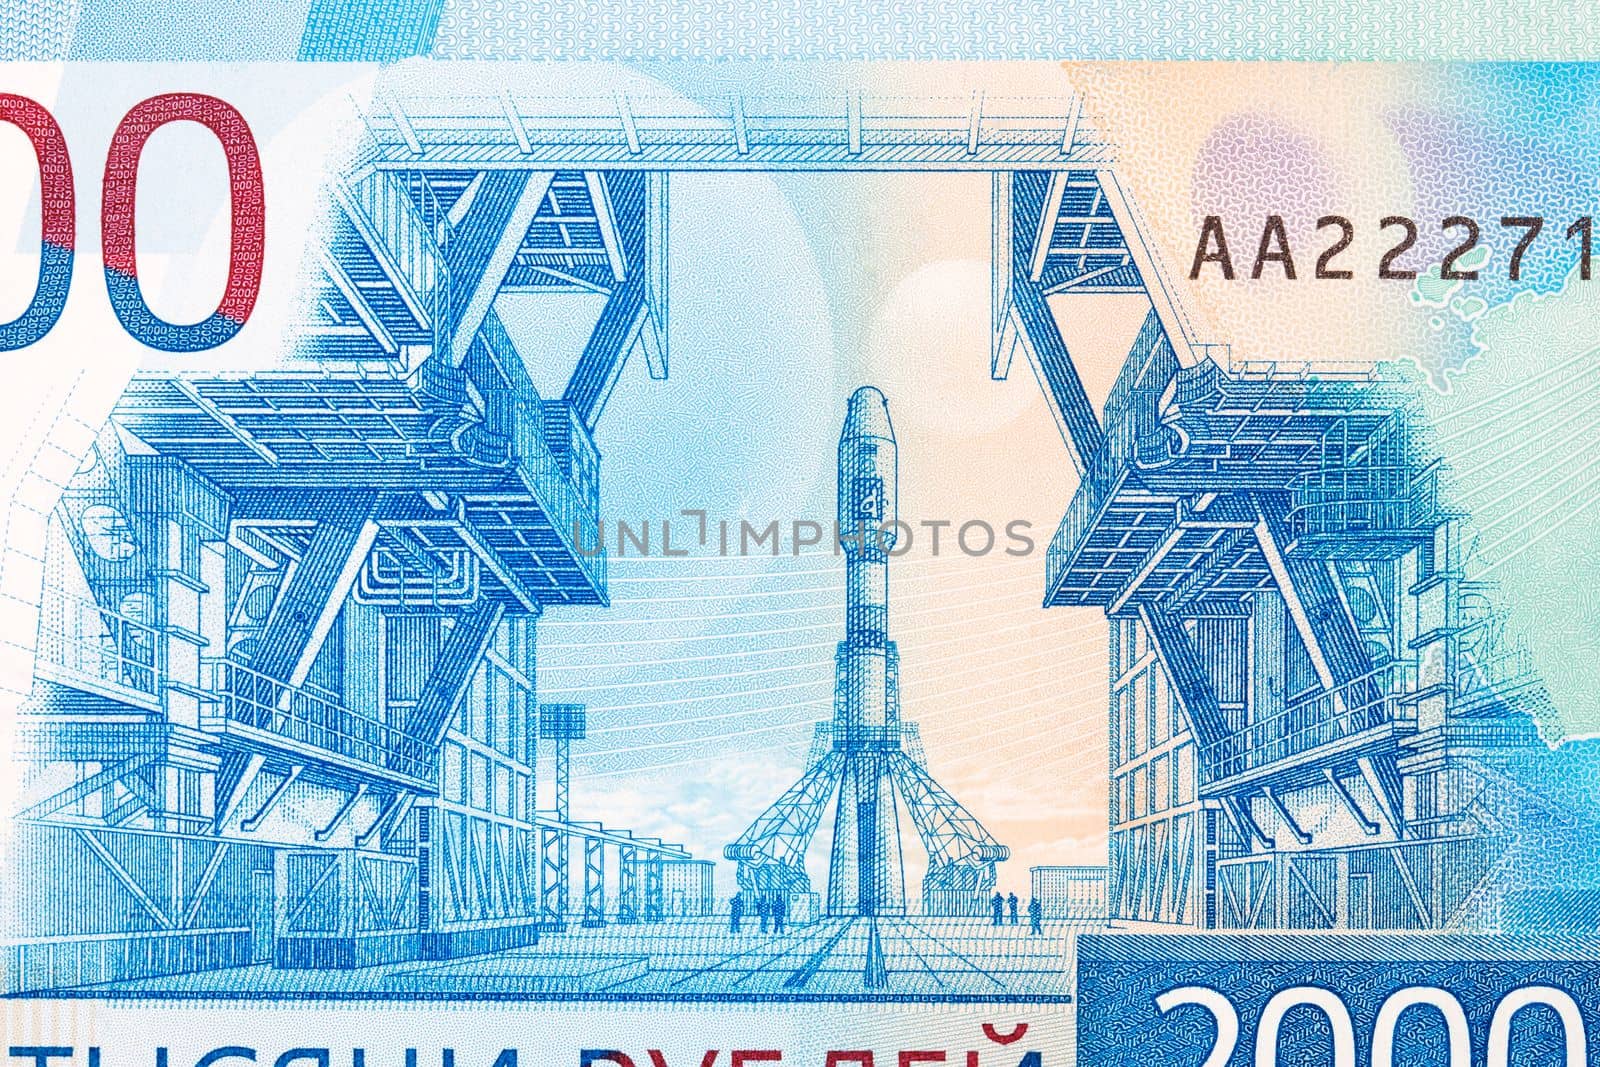 Vostochny Cosmodrome, Amur Region from Russian money by johan10